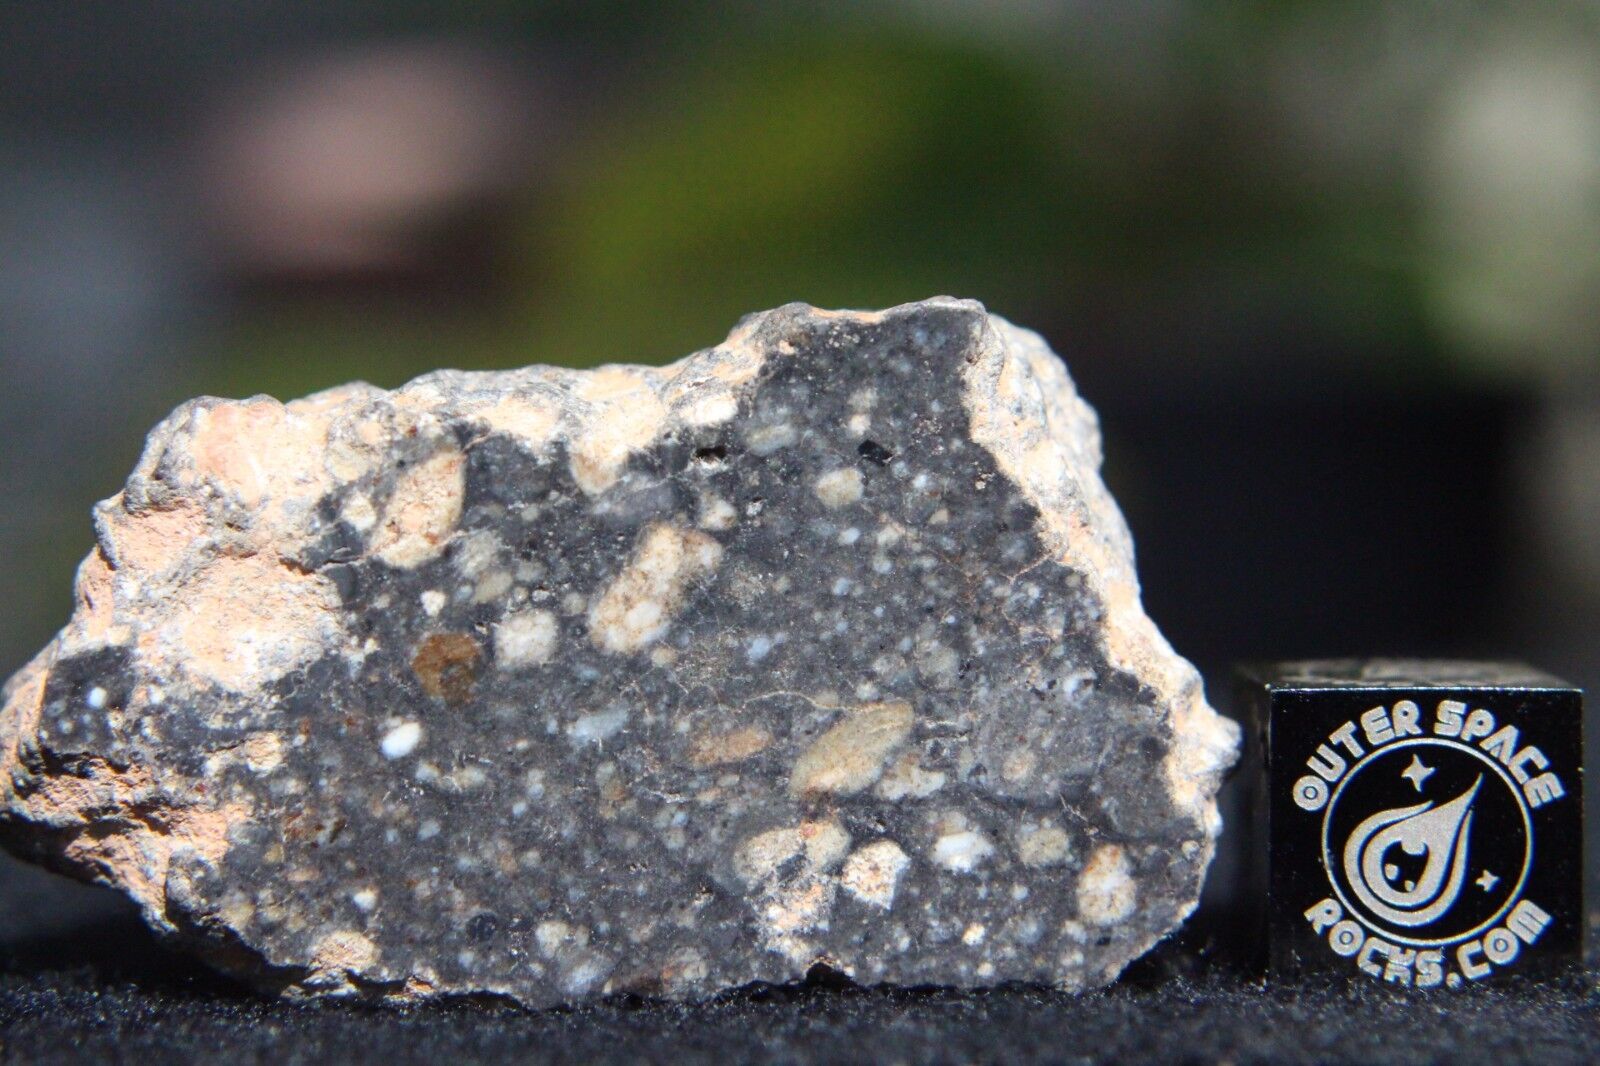 NWA 11266 Official Lunar Feldspathic Regolith Breccia Meteorite 15.7g polished